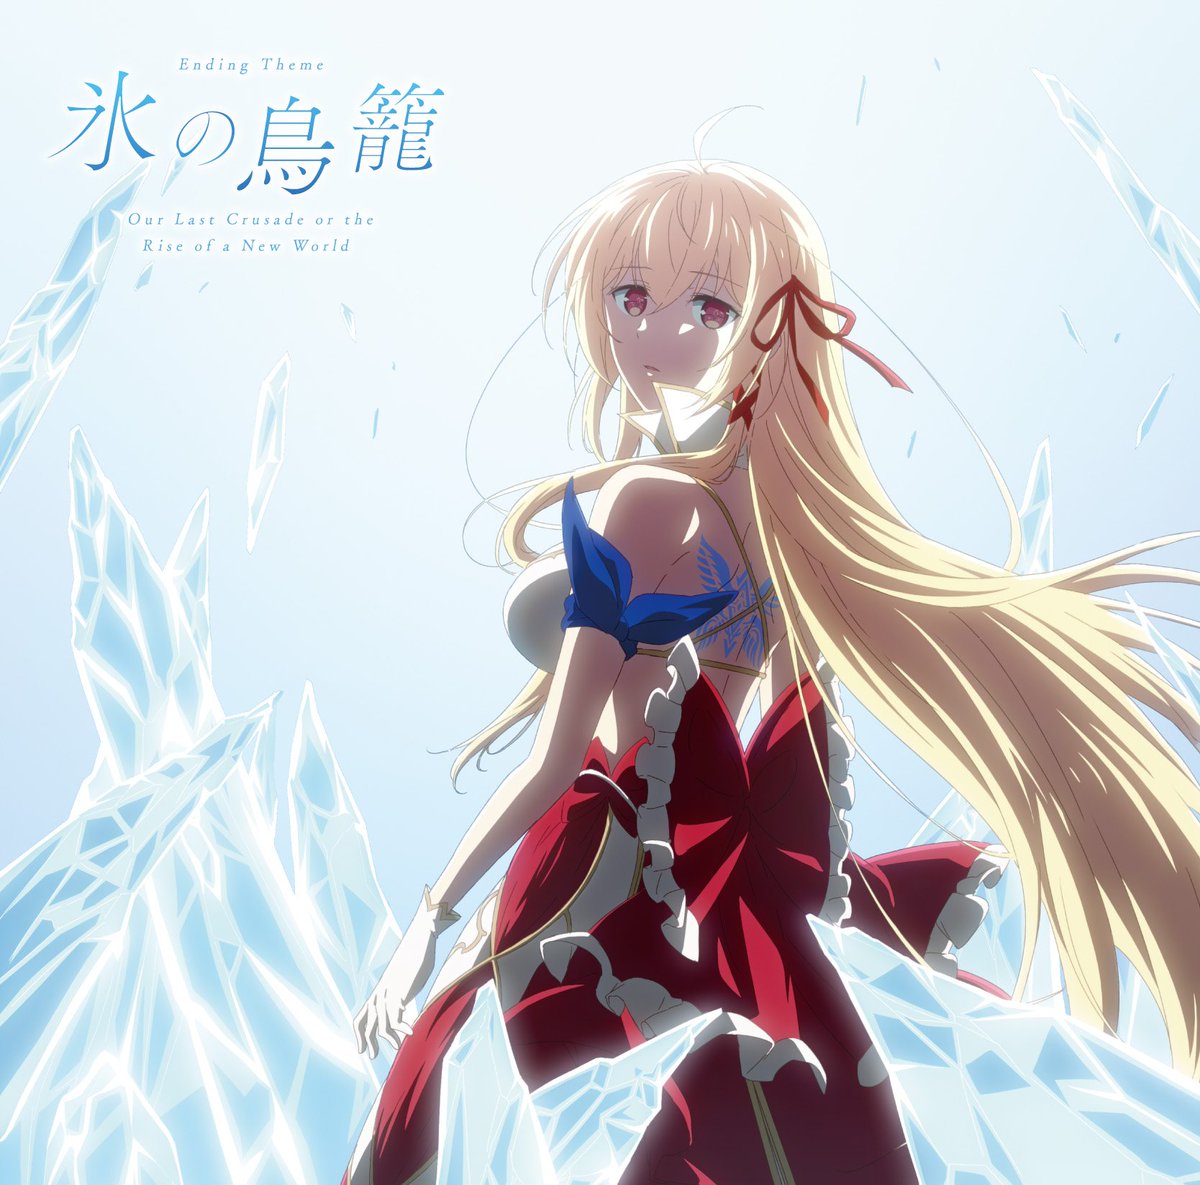 Cover art for『Aliceliese Lou Nebulis IX (Sora Amamiya) - 奏響エトランゼ』from the release『Koori no Torikago